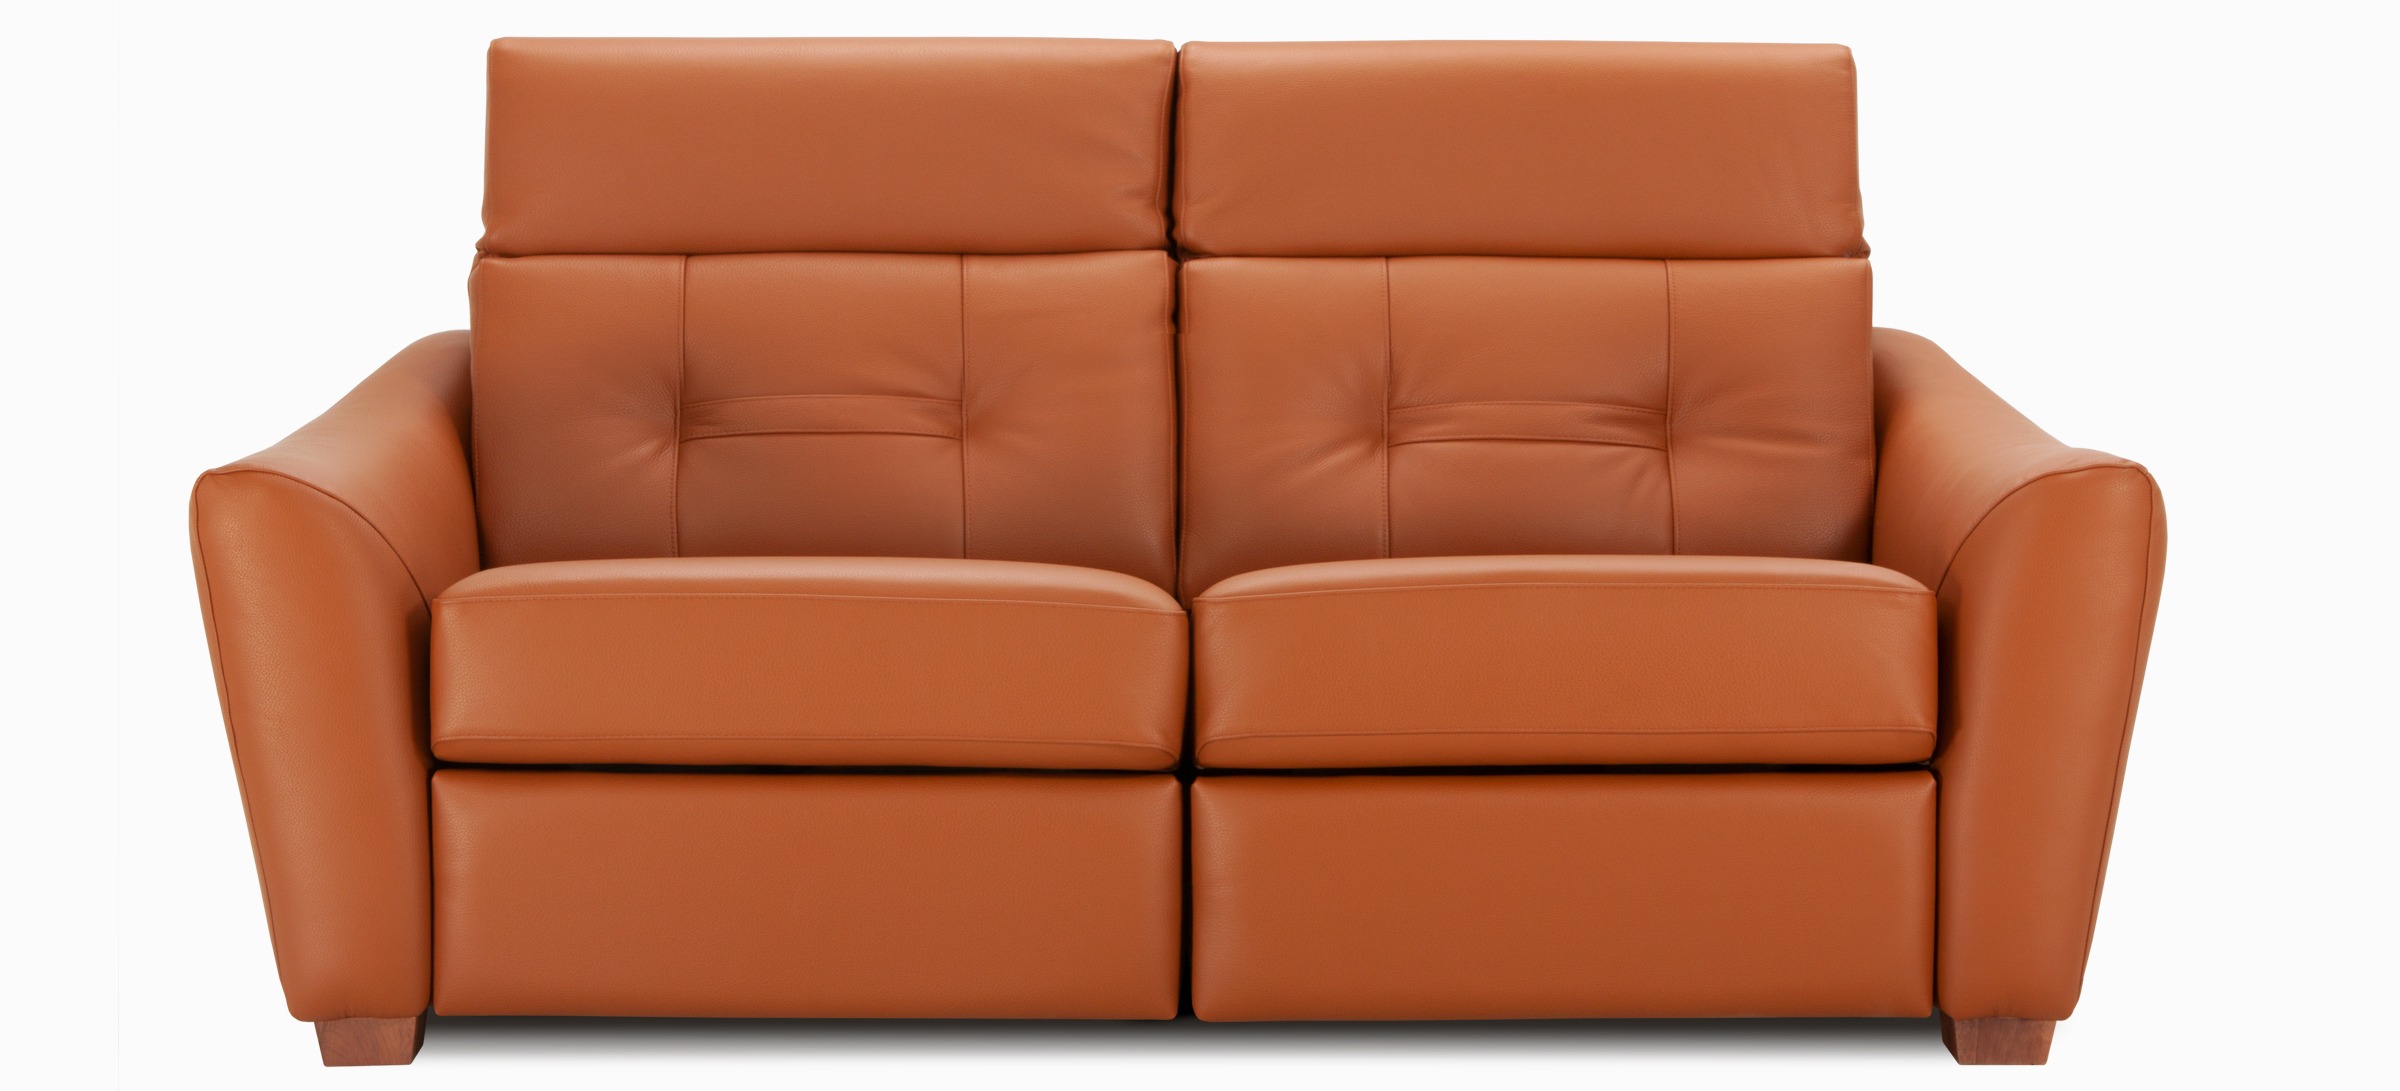 Clario sofa apt cinnamon front1